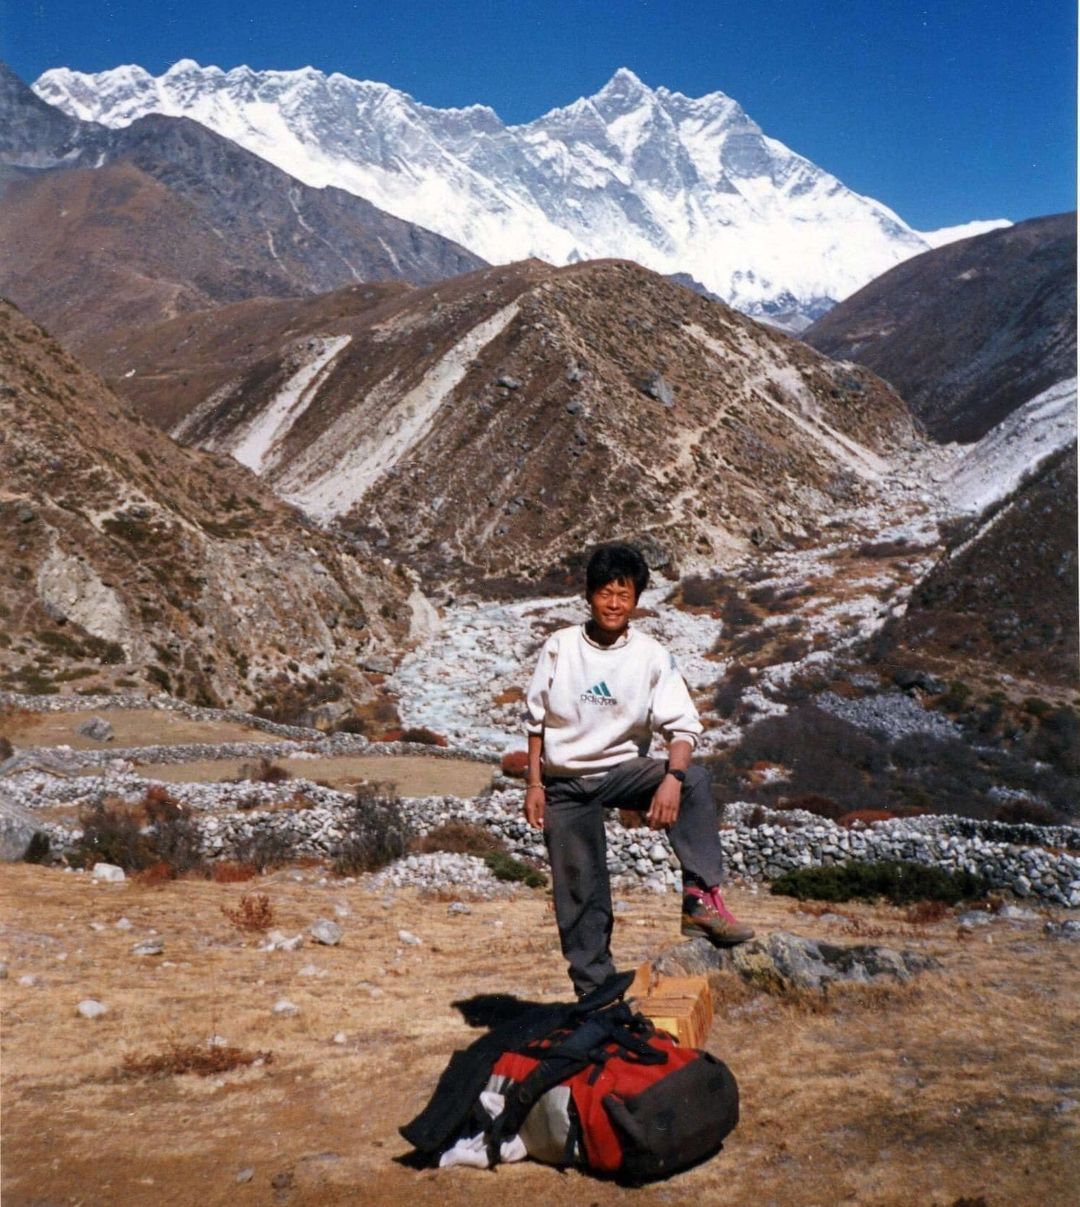 Mount Lhotse above the Imja Khosi Valley in the Khumbu Region of the Nepal Himalaya